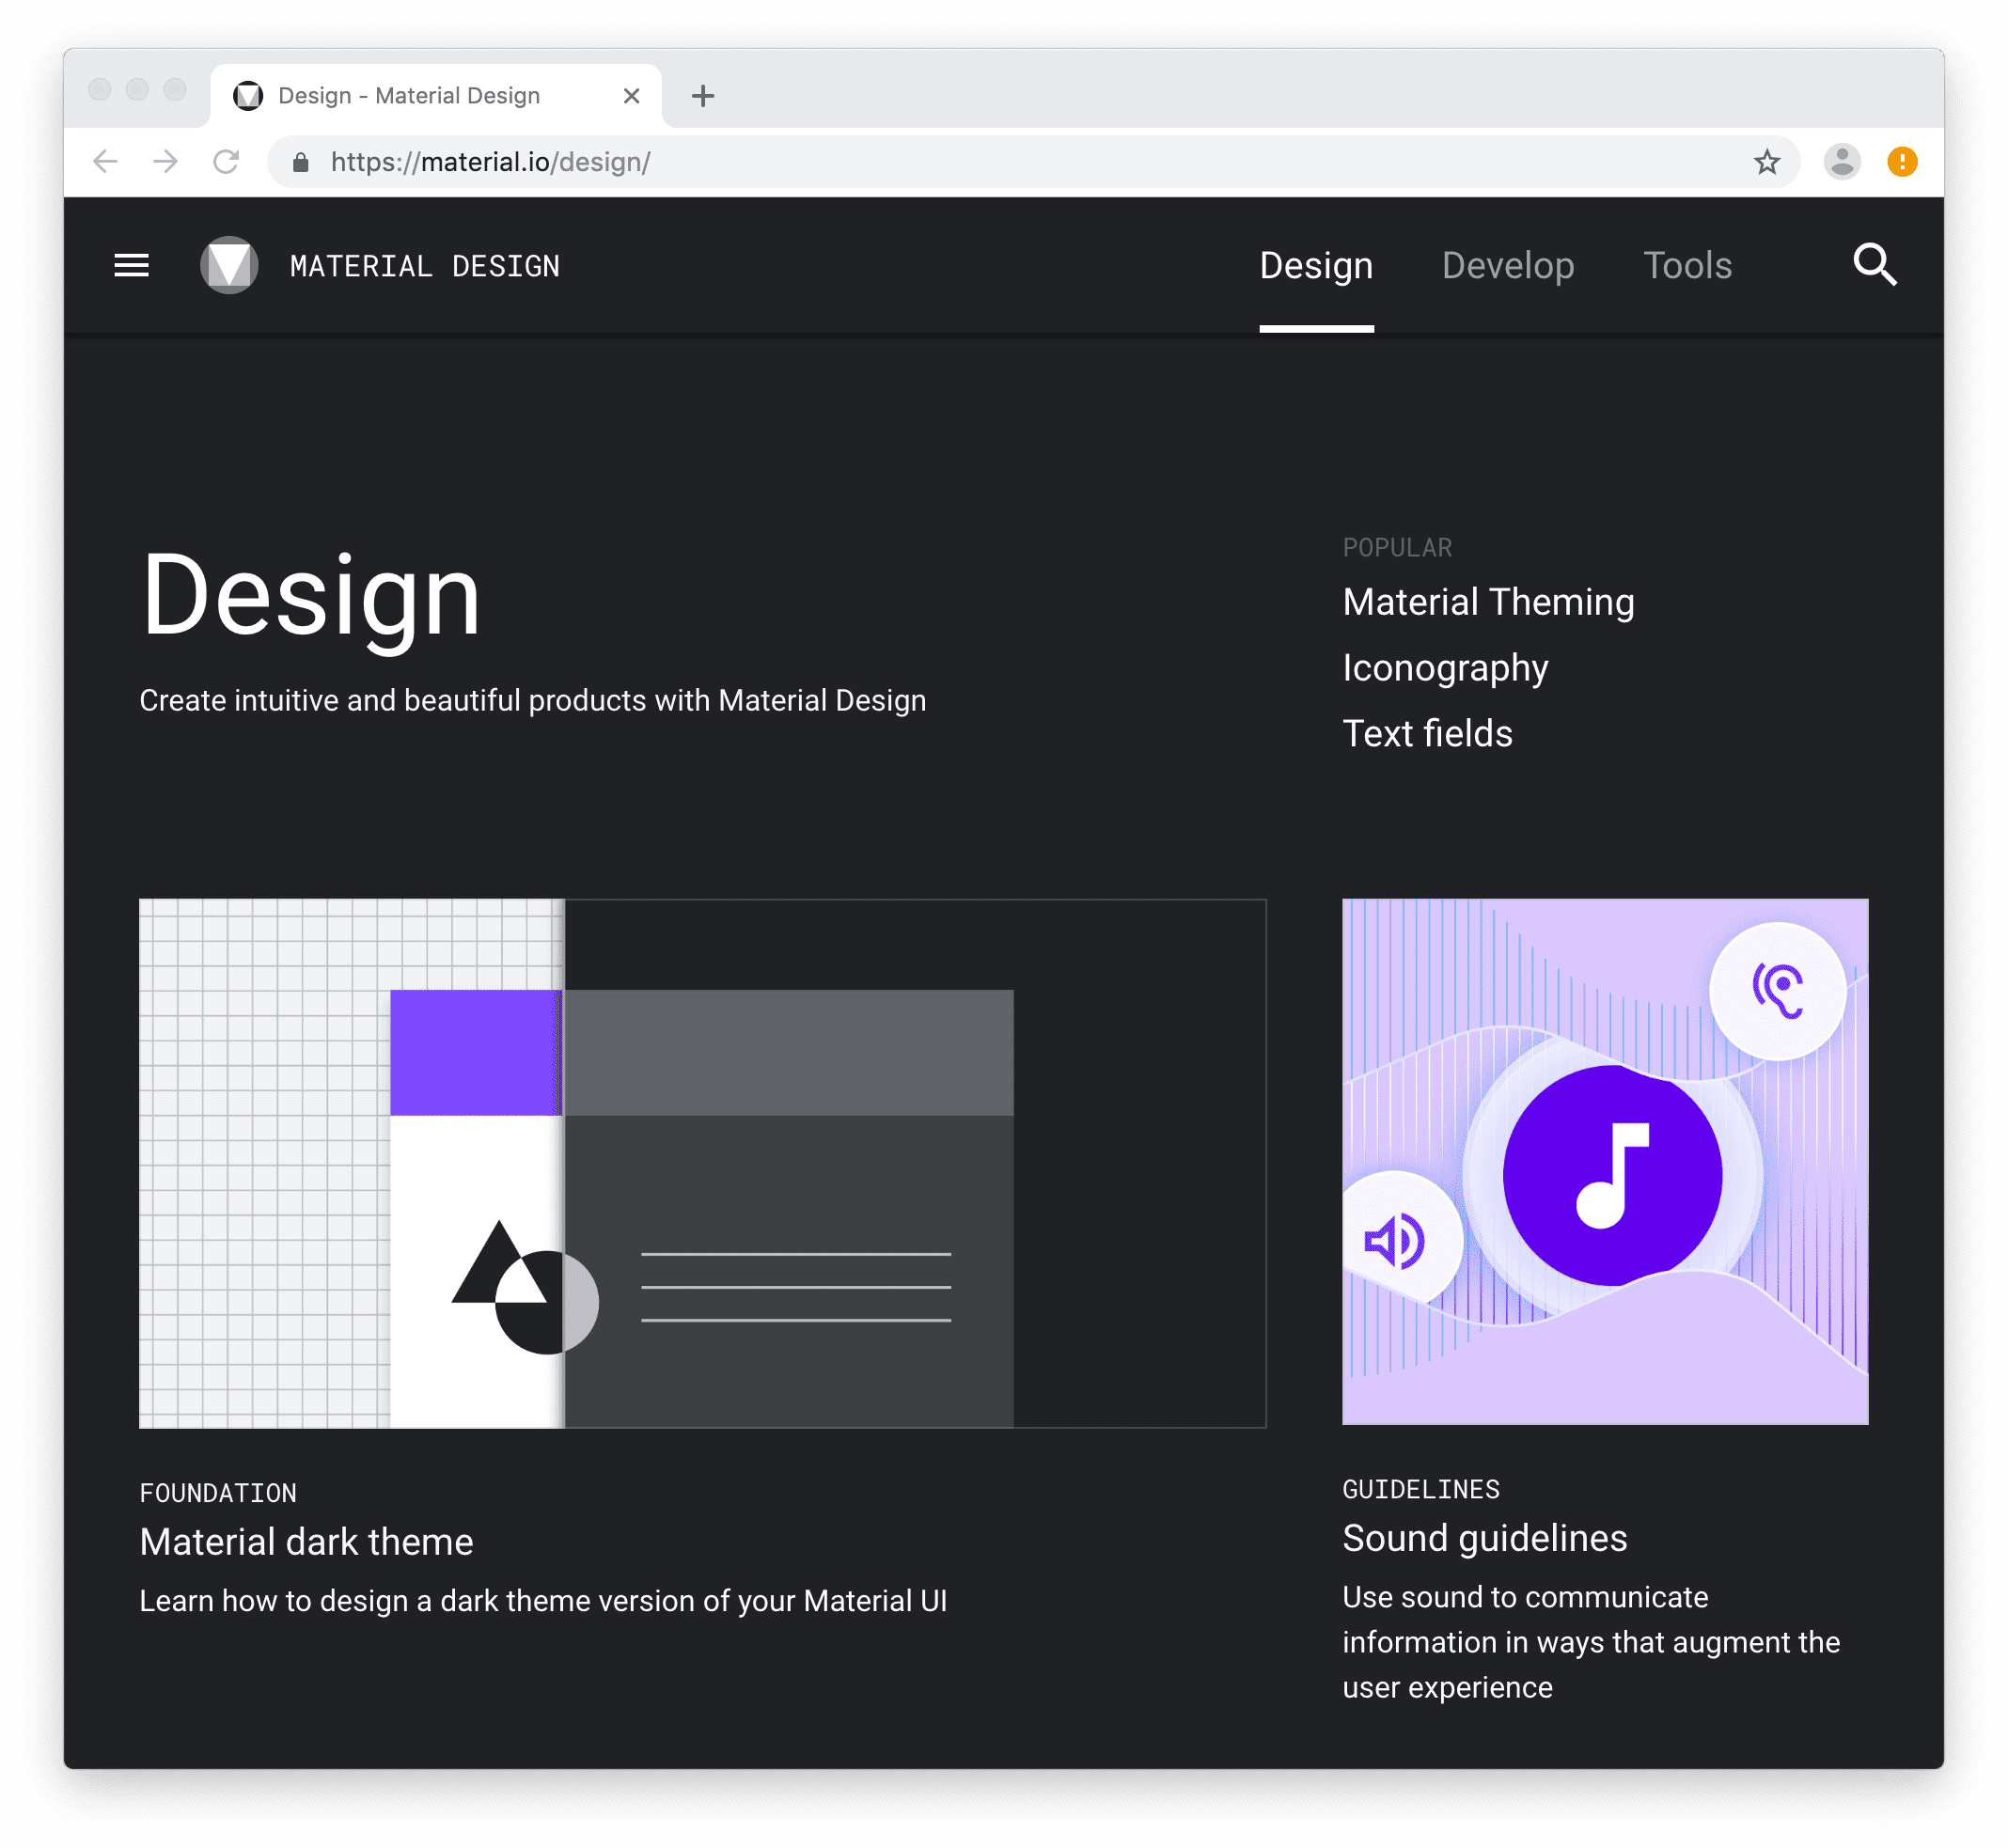 Strona główna Material Design, https://material.io.